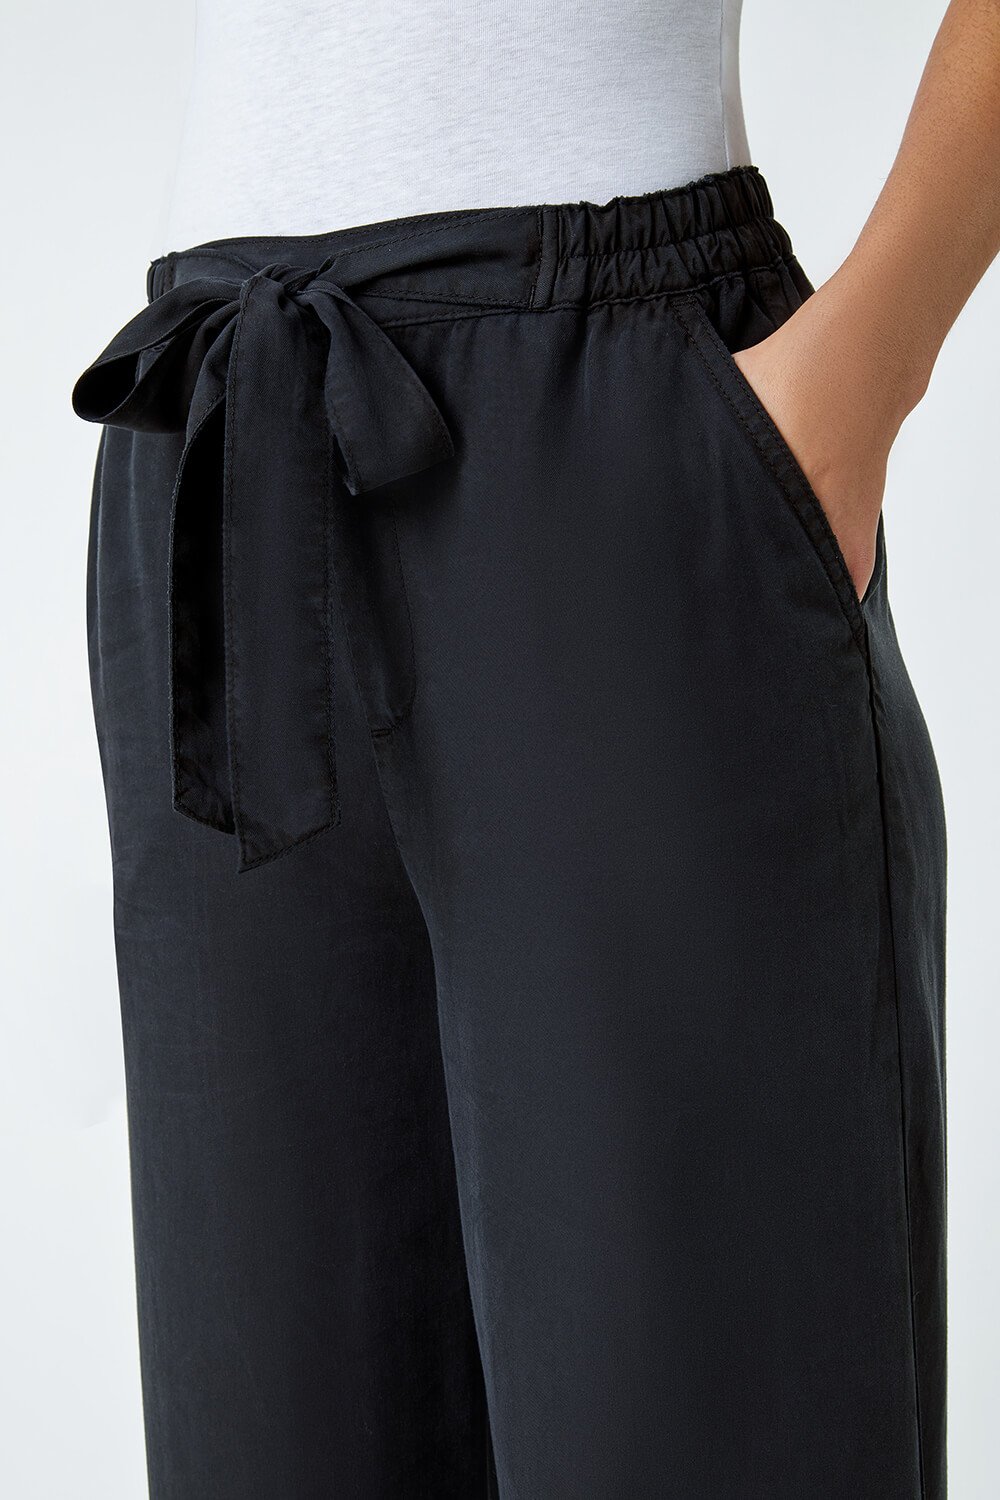 Black Tie Waist Wide Leg Trousers, Image 5 of 5